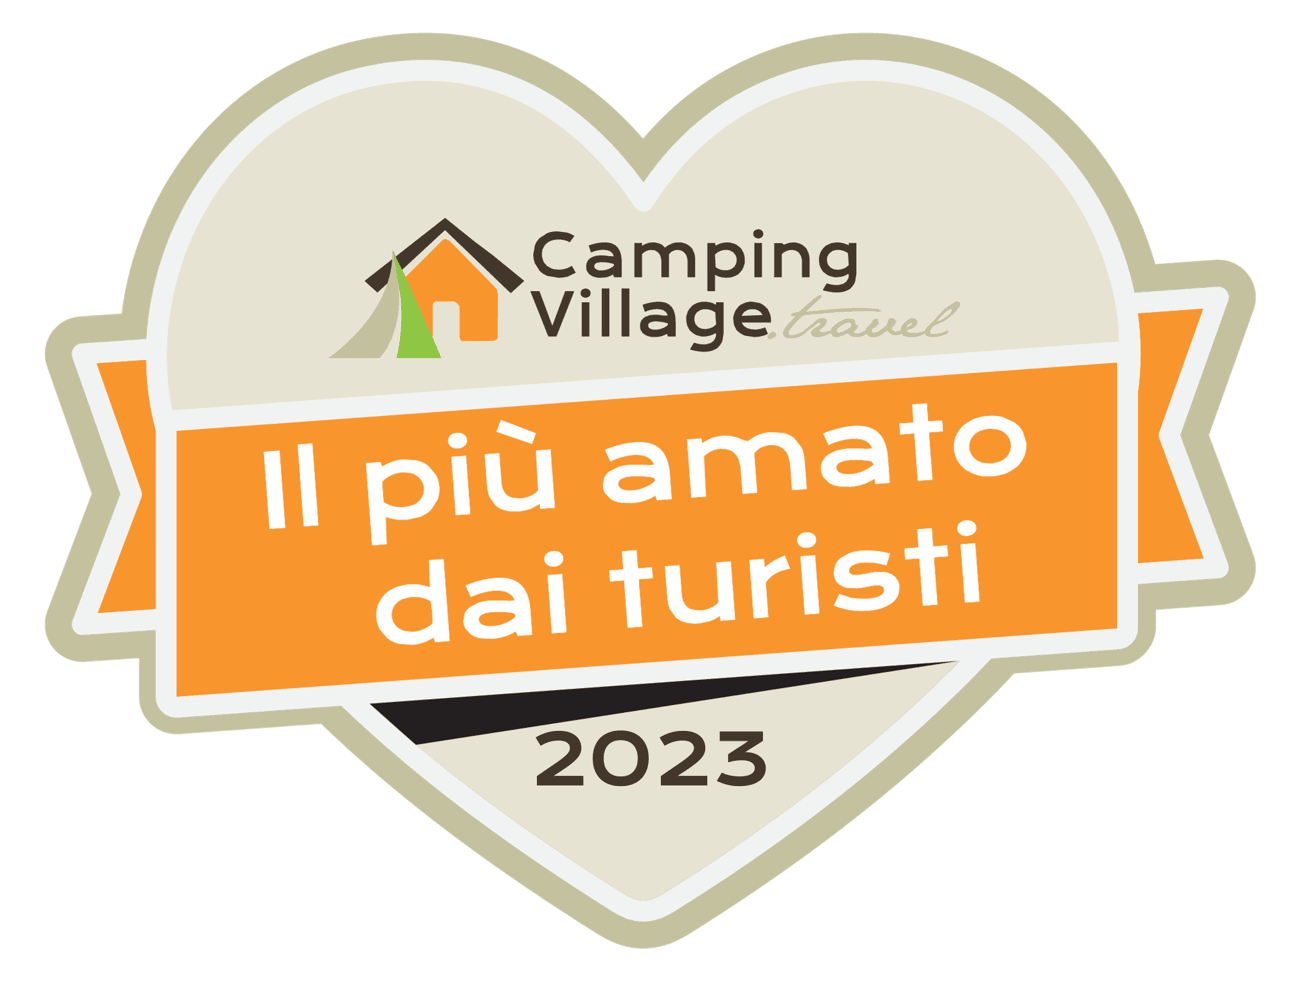 Camping Village Travel